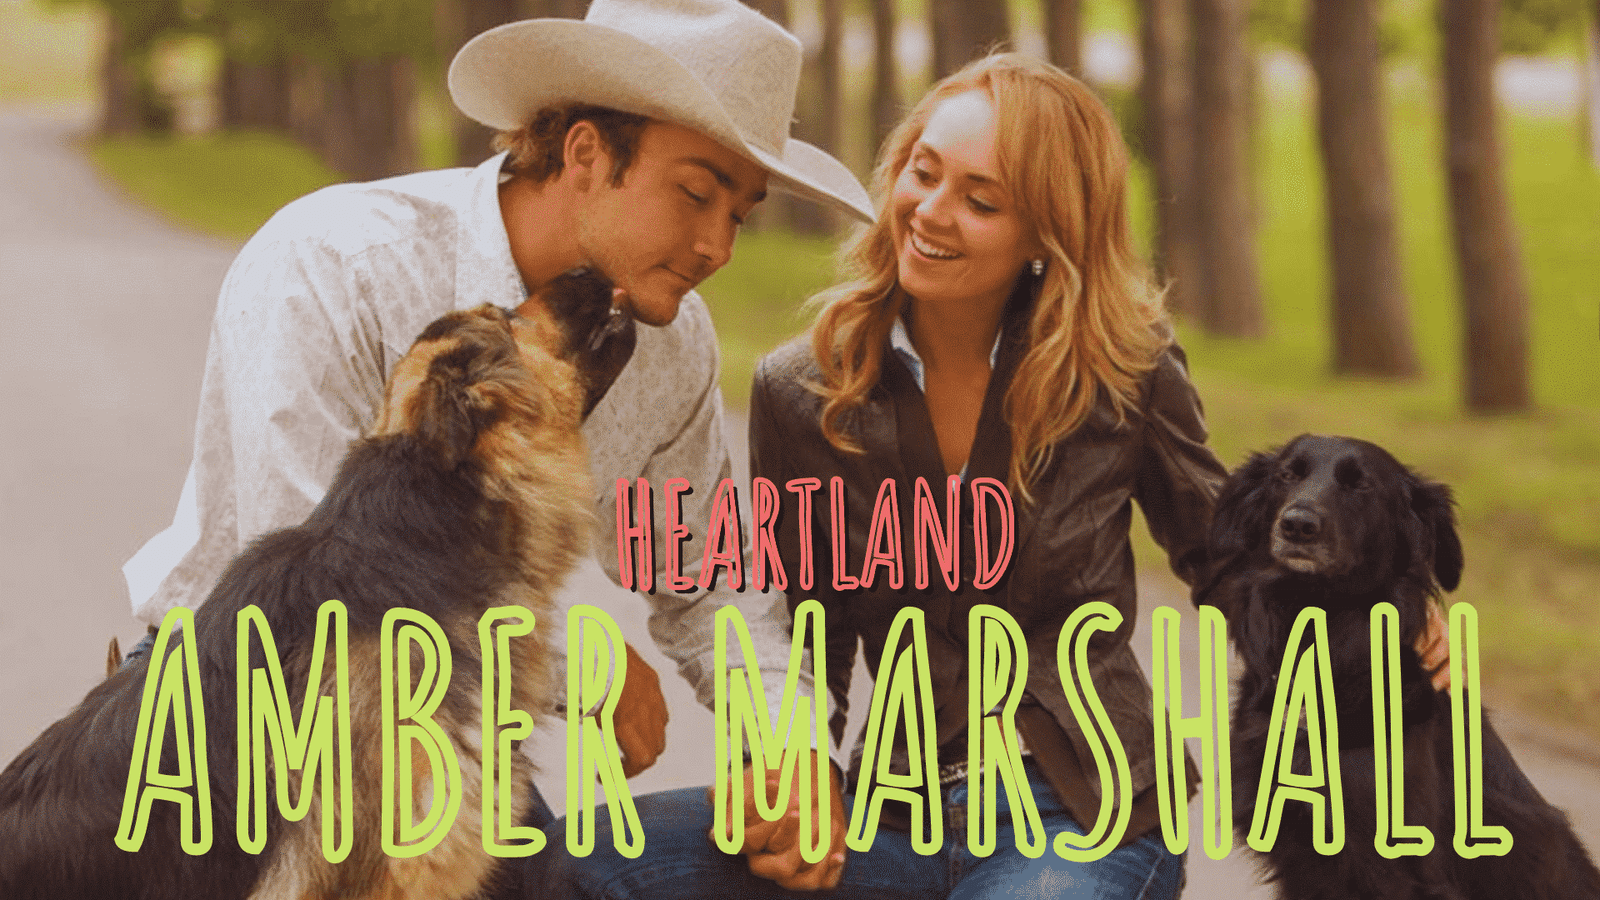 Heartland Amber Marshall with her husband Shawn Turner.